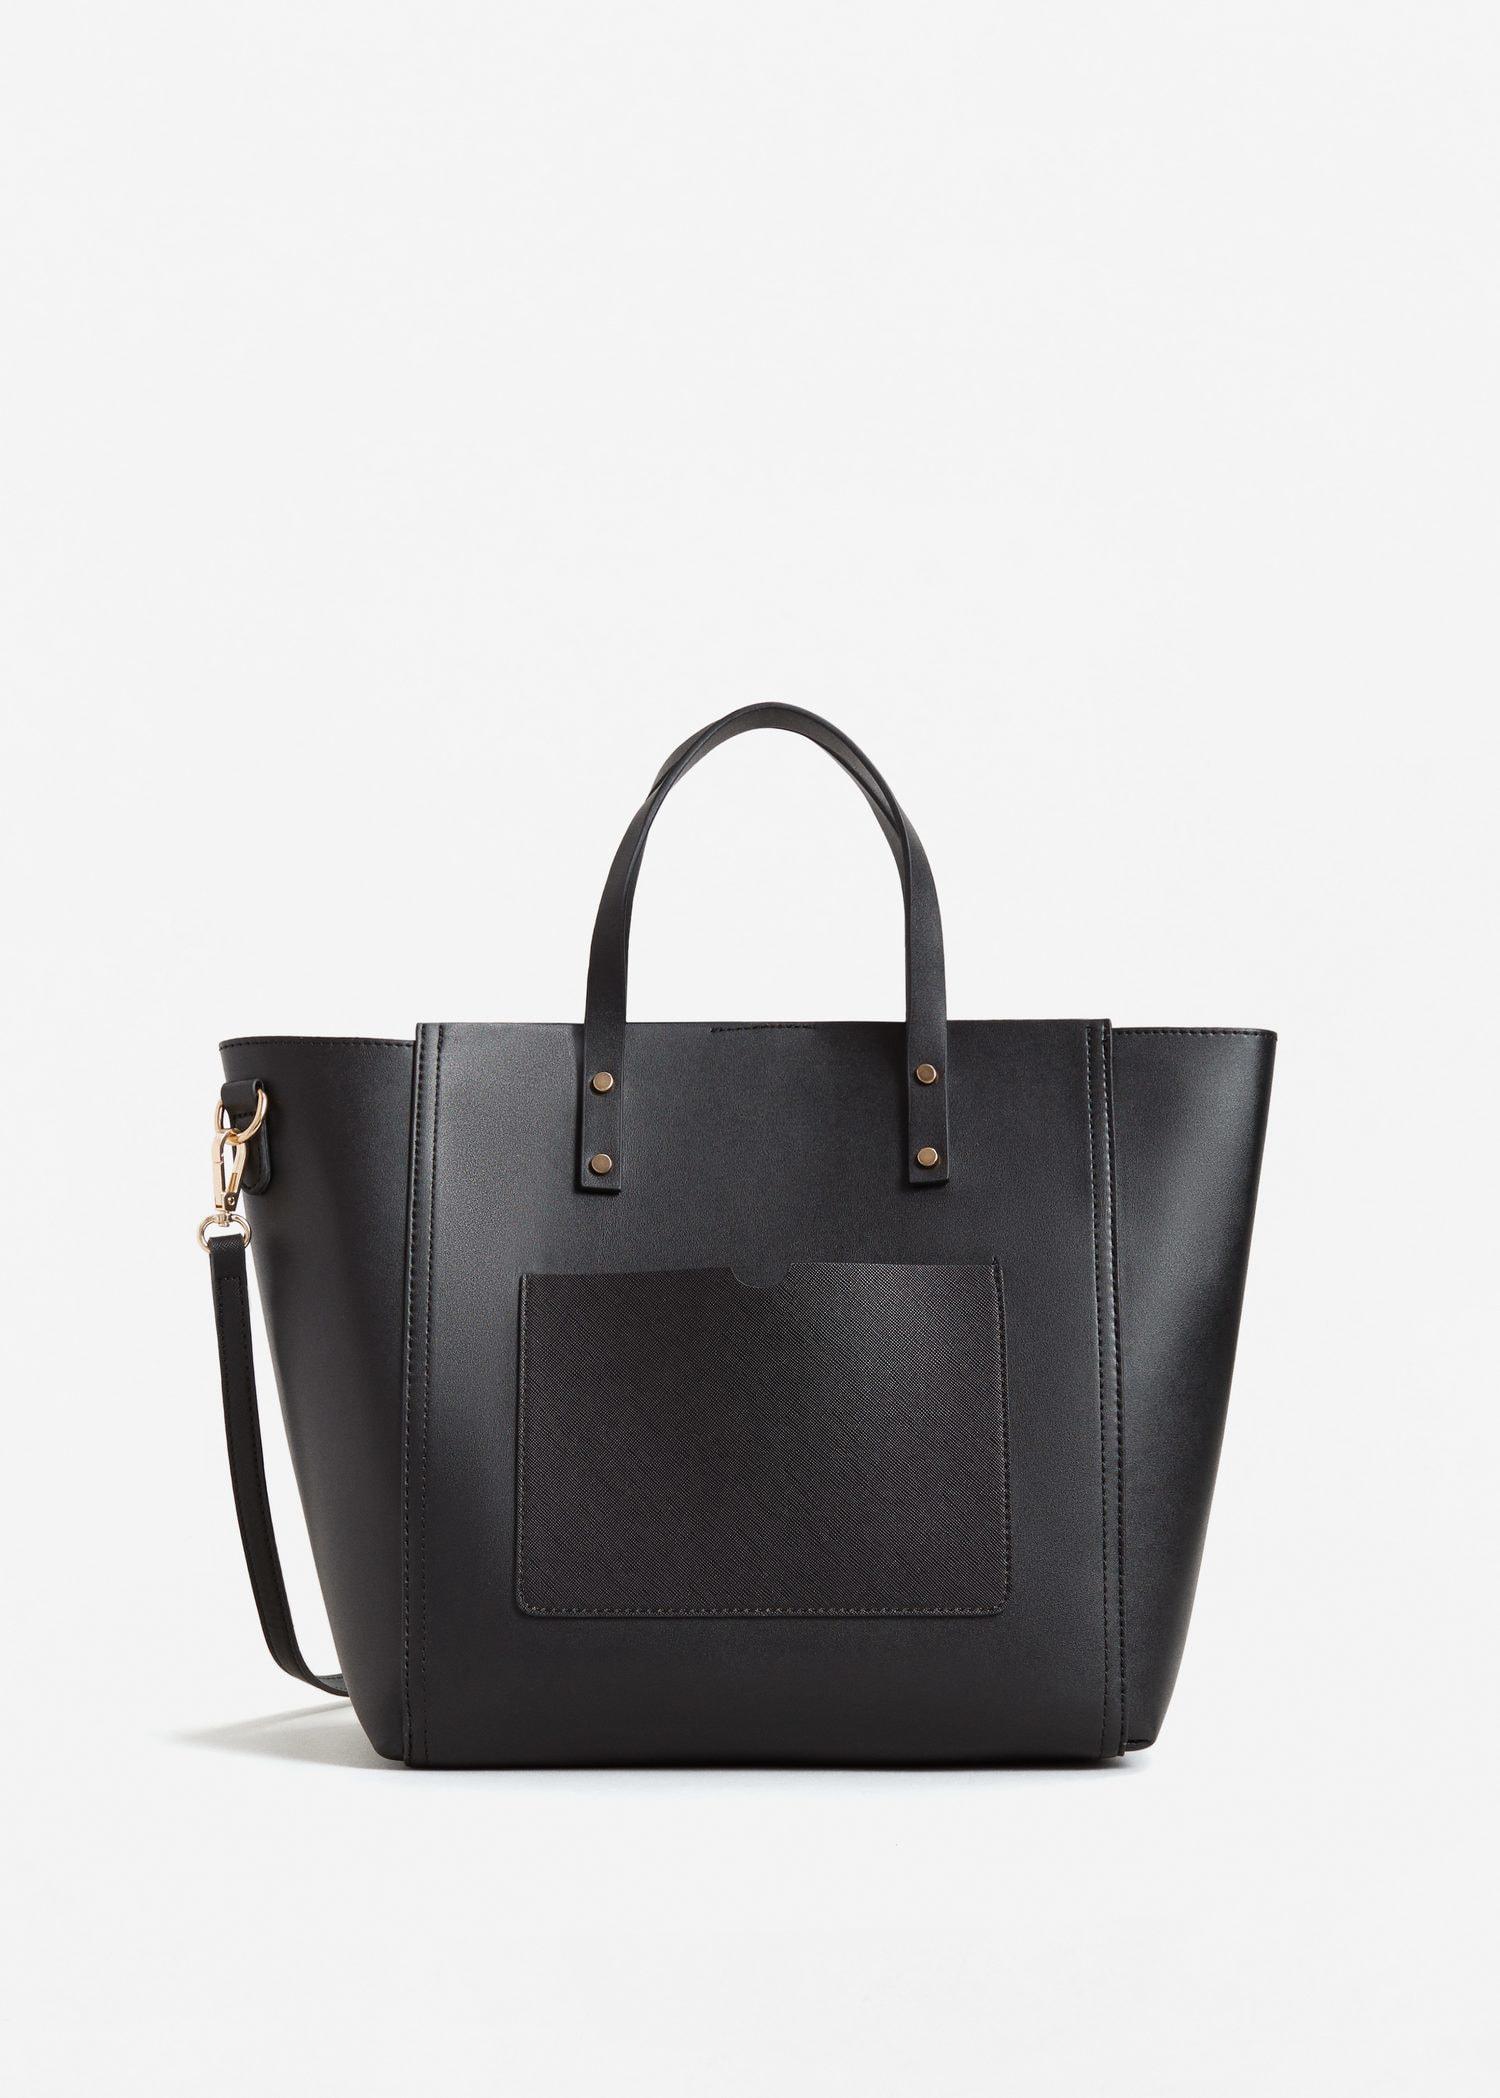 Mango Leather Pebbled Shopper Bag in Black - Lyst